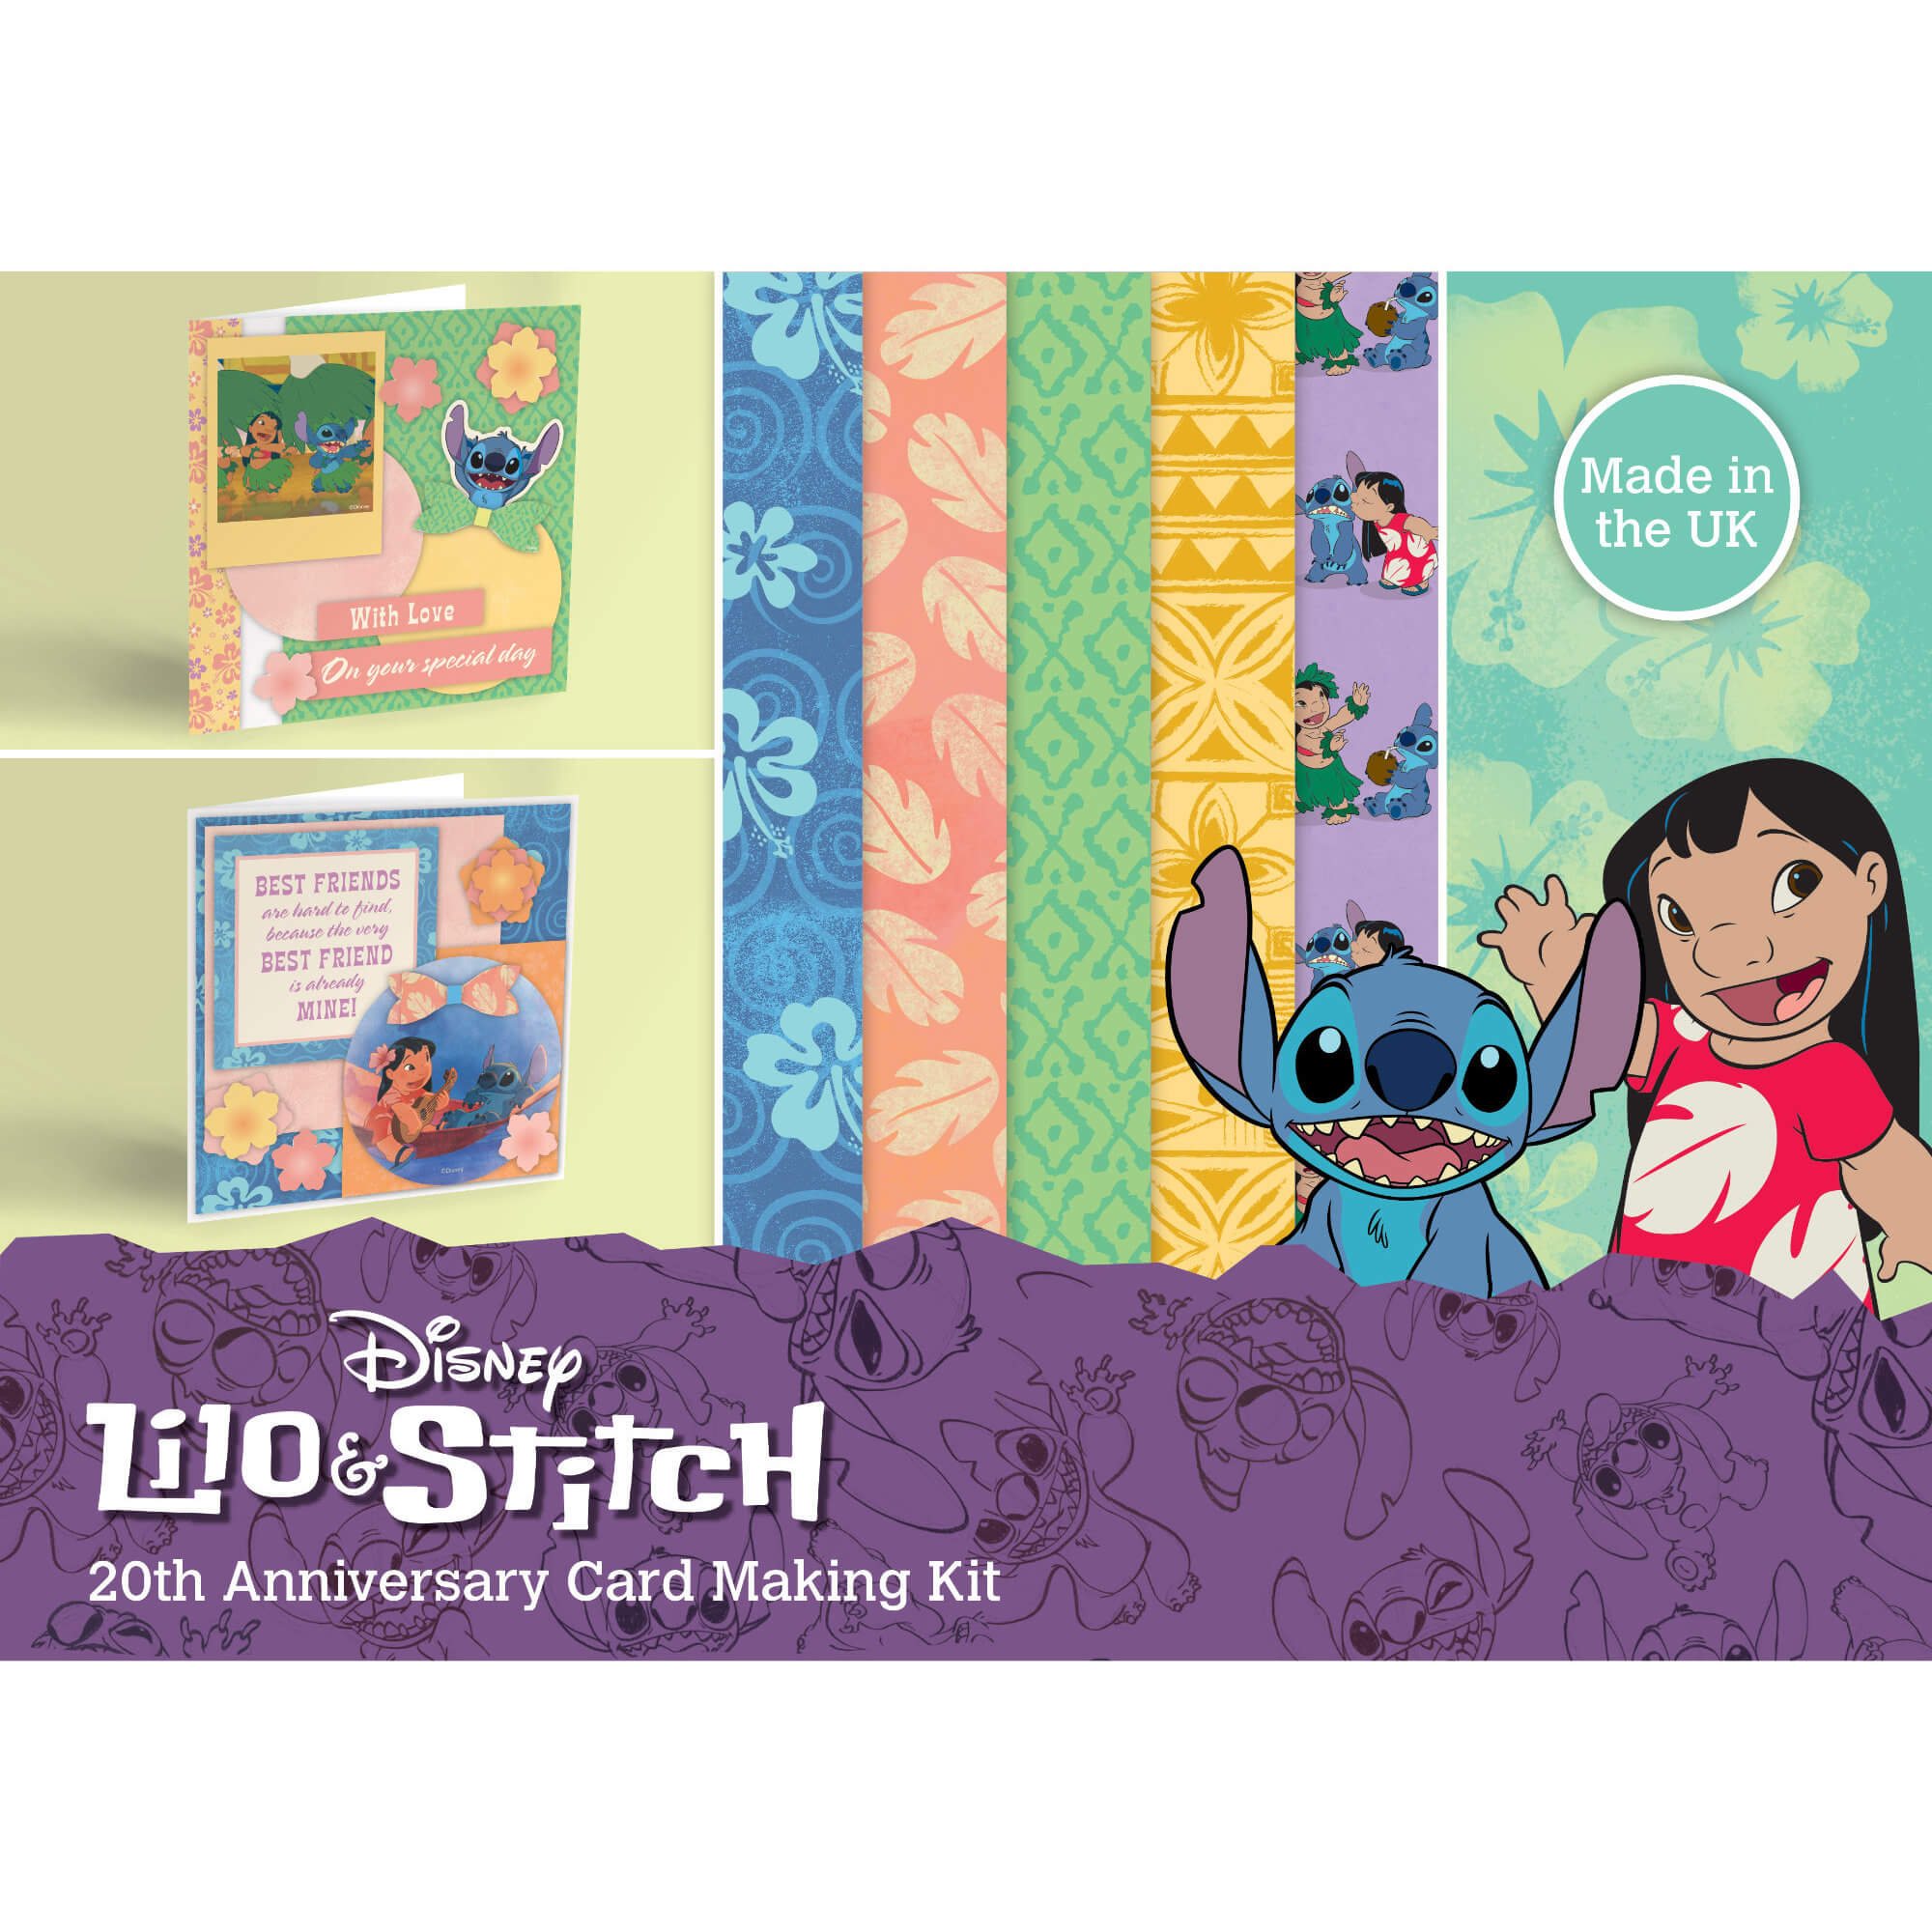 Disney Lilo & Stitch 20th Anniversary Card Making Kit